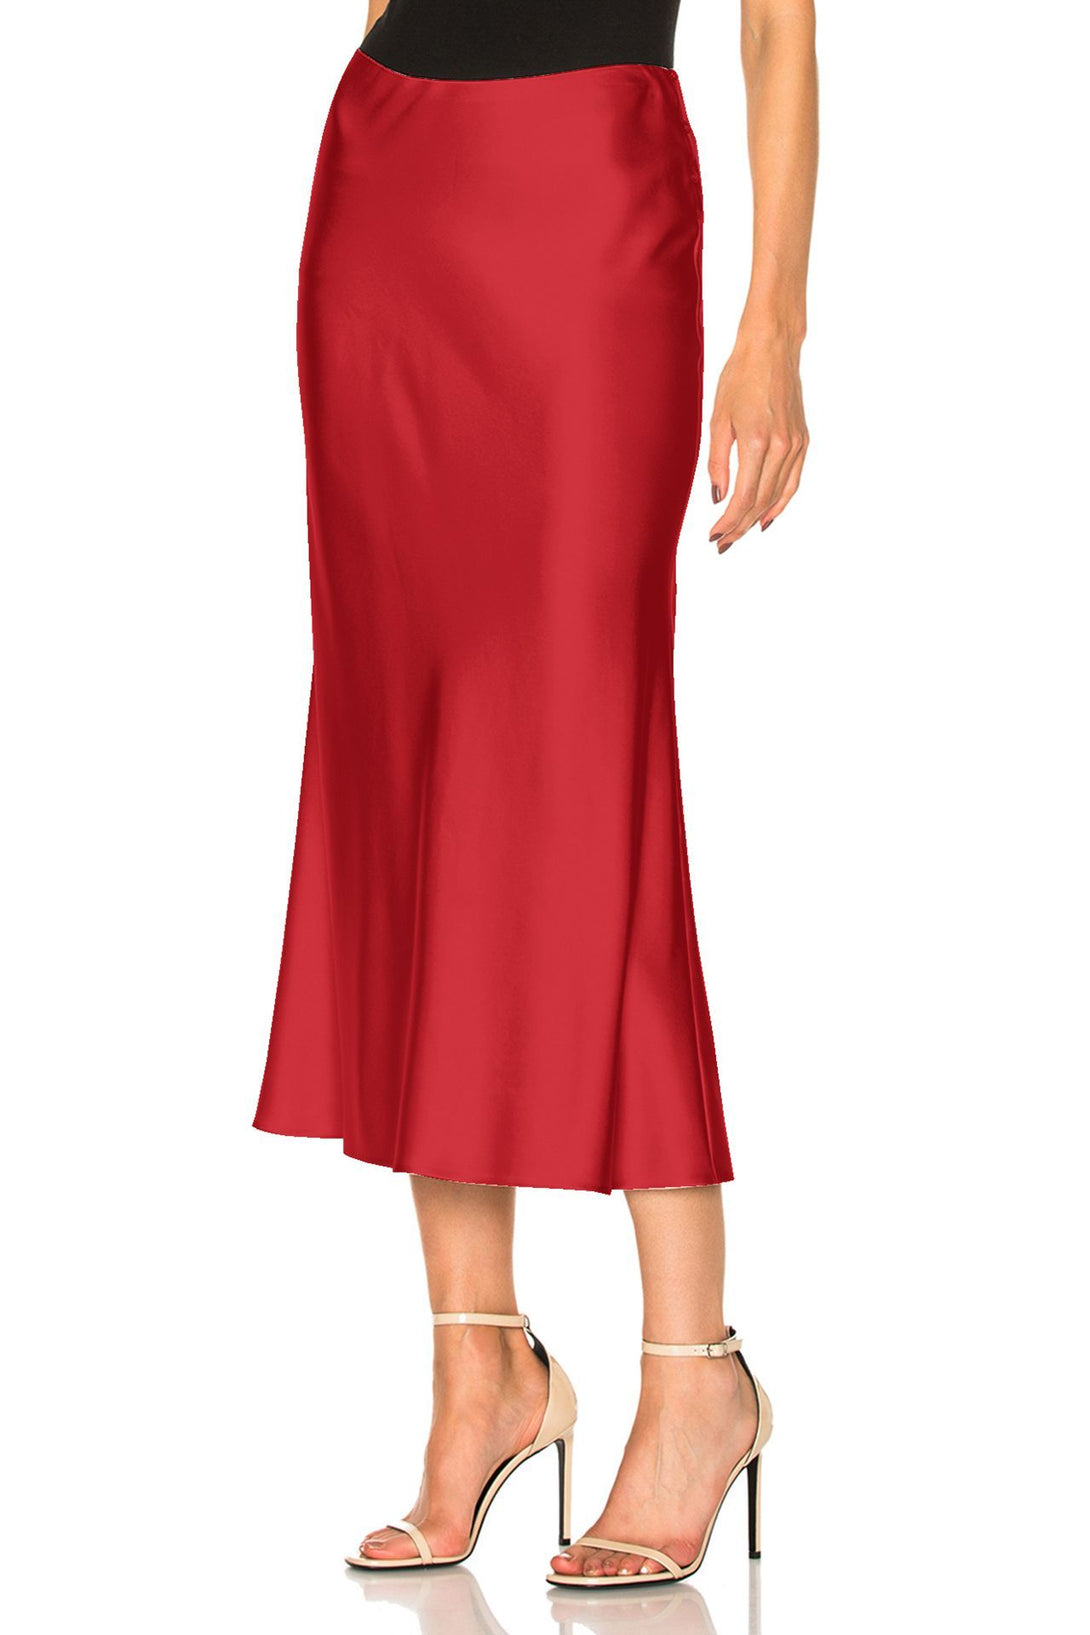 Silk-Designer-Red-Skirt-By-Kyle-Richard